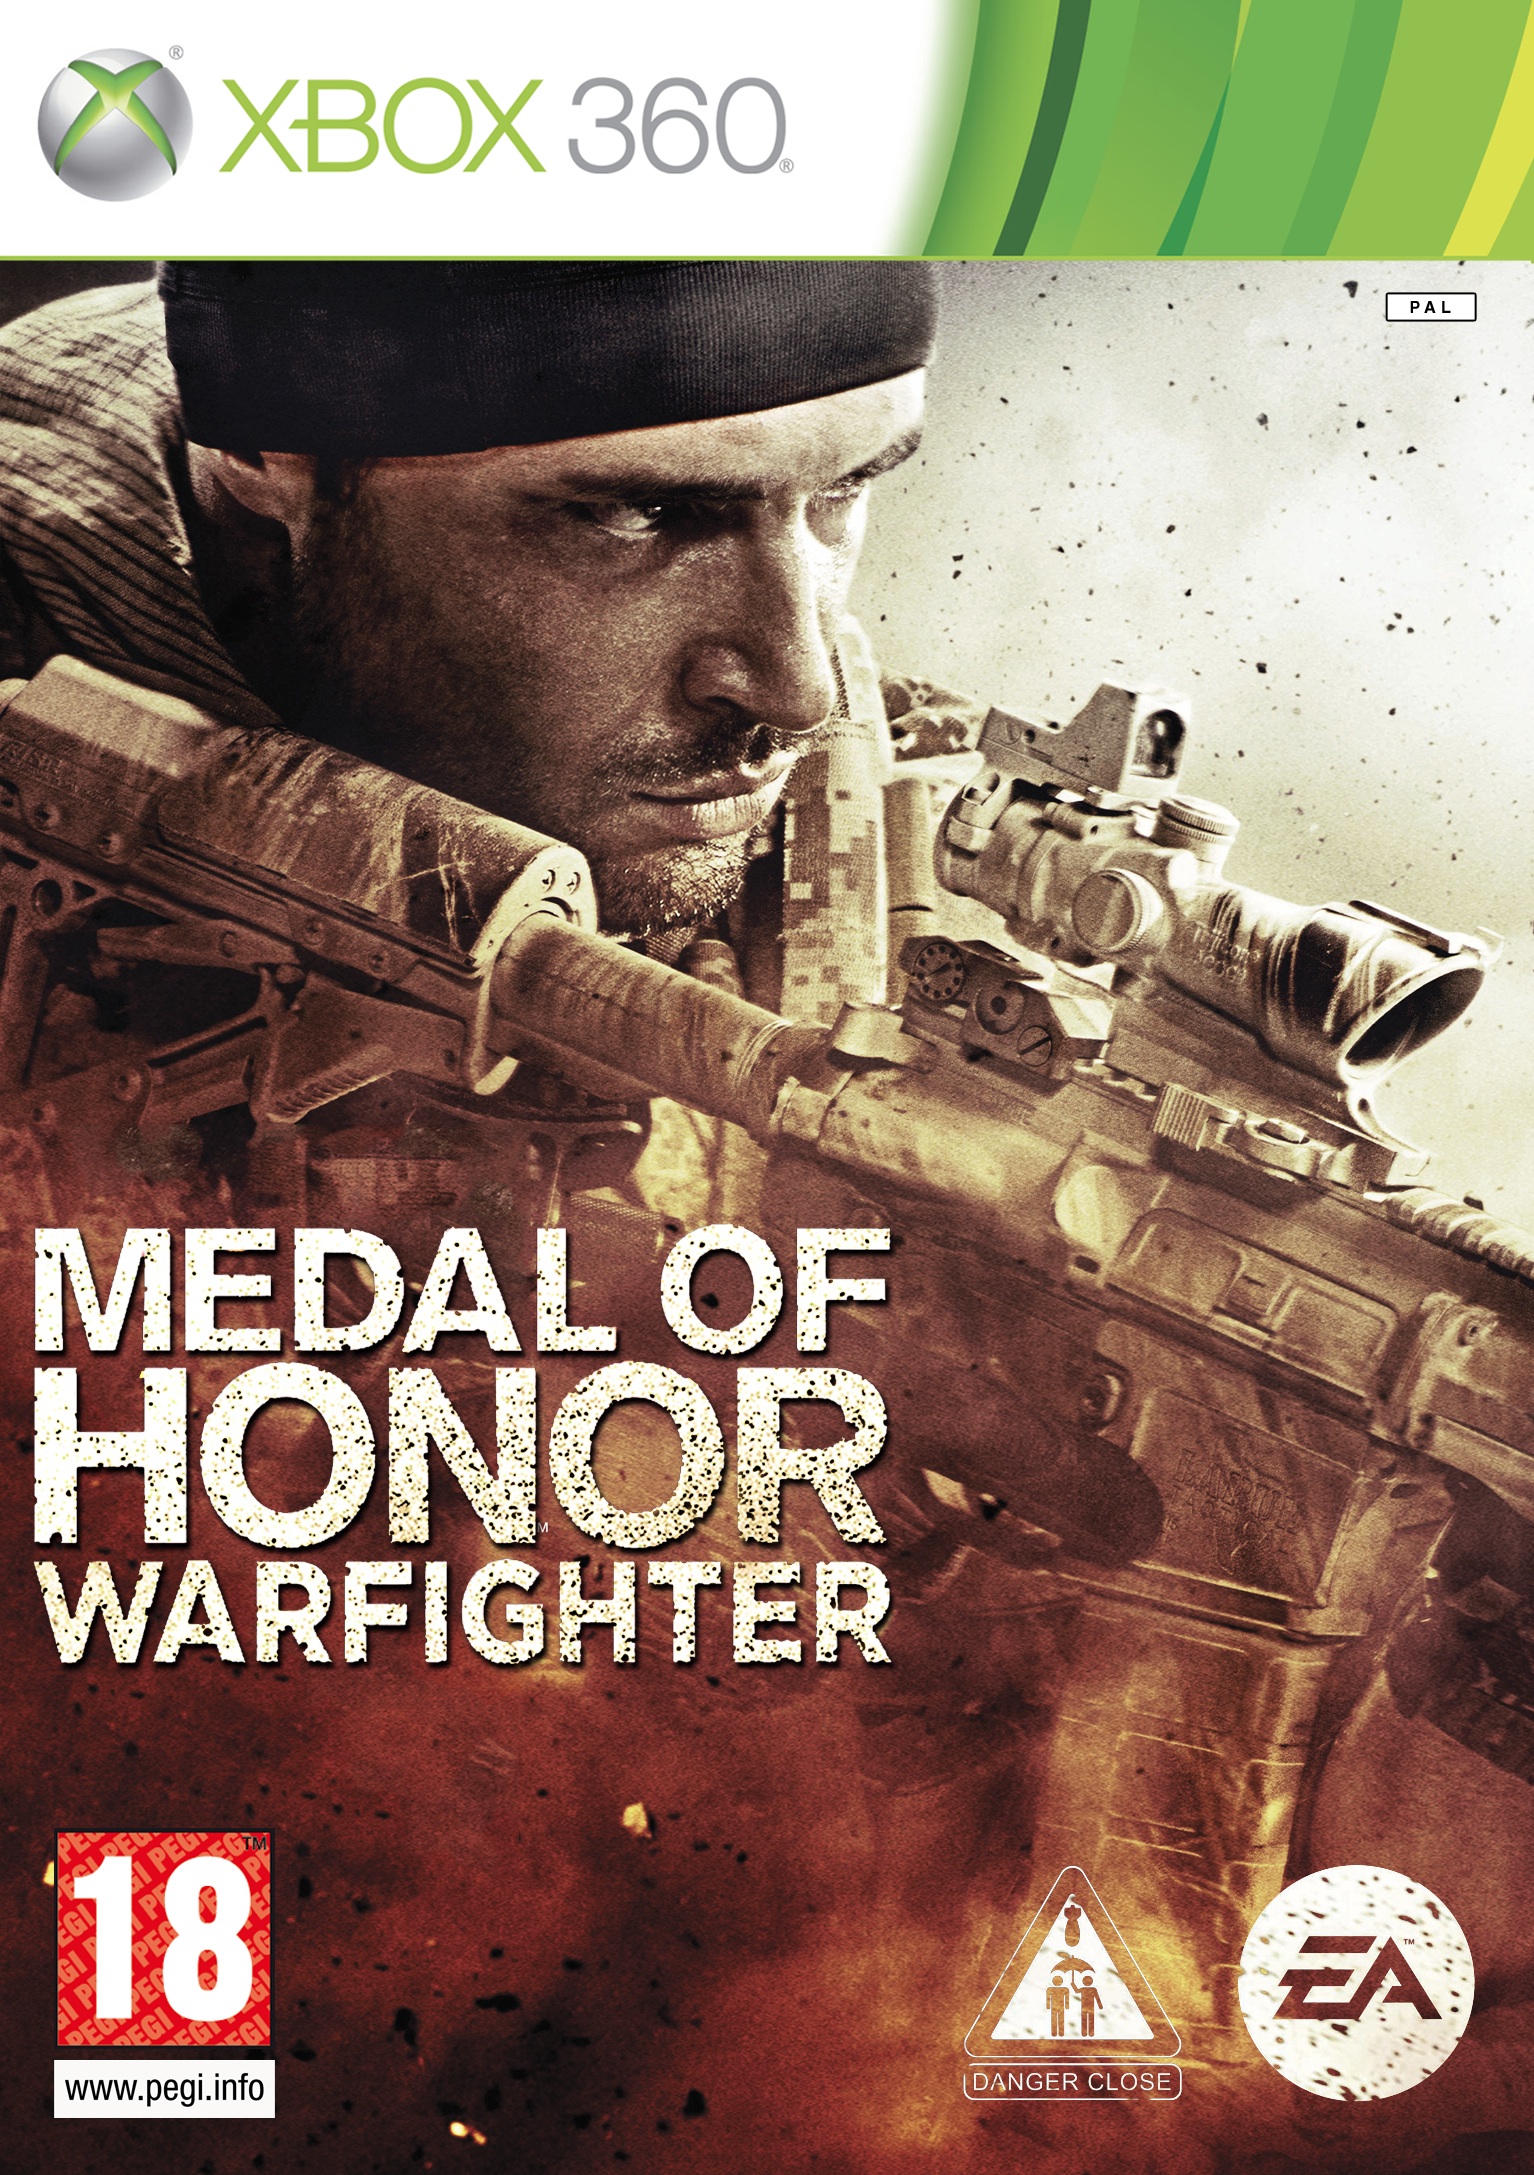 Medal of honor 360. Medal of Honor Xbox 360. Медаль за отвагу на хбокс 360. Medal of Honor: Warfighter Xbox 360 обложка. Medal of Honor Warfighter Xbox 360 Disk.